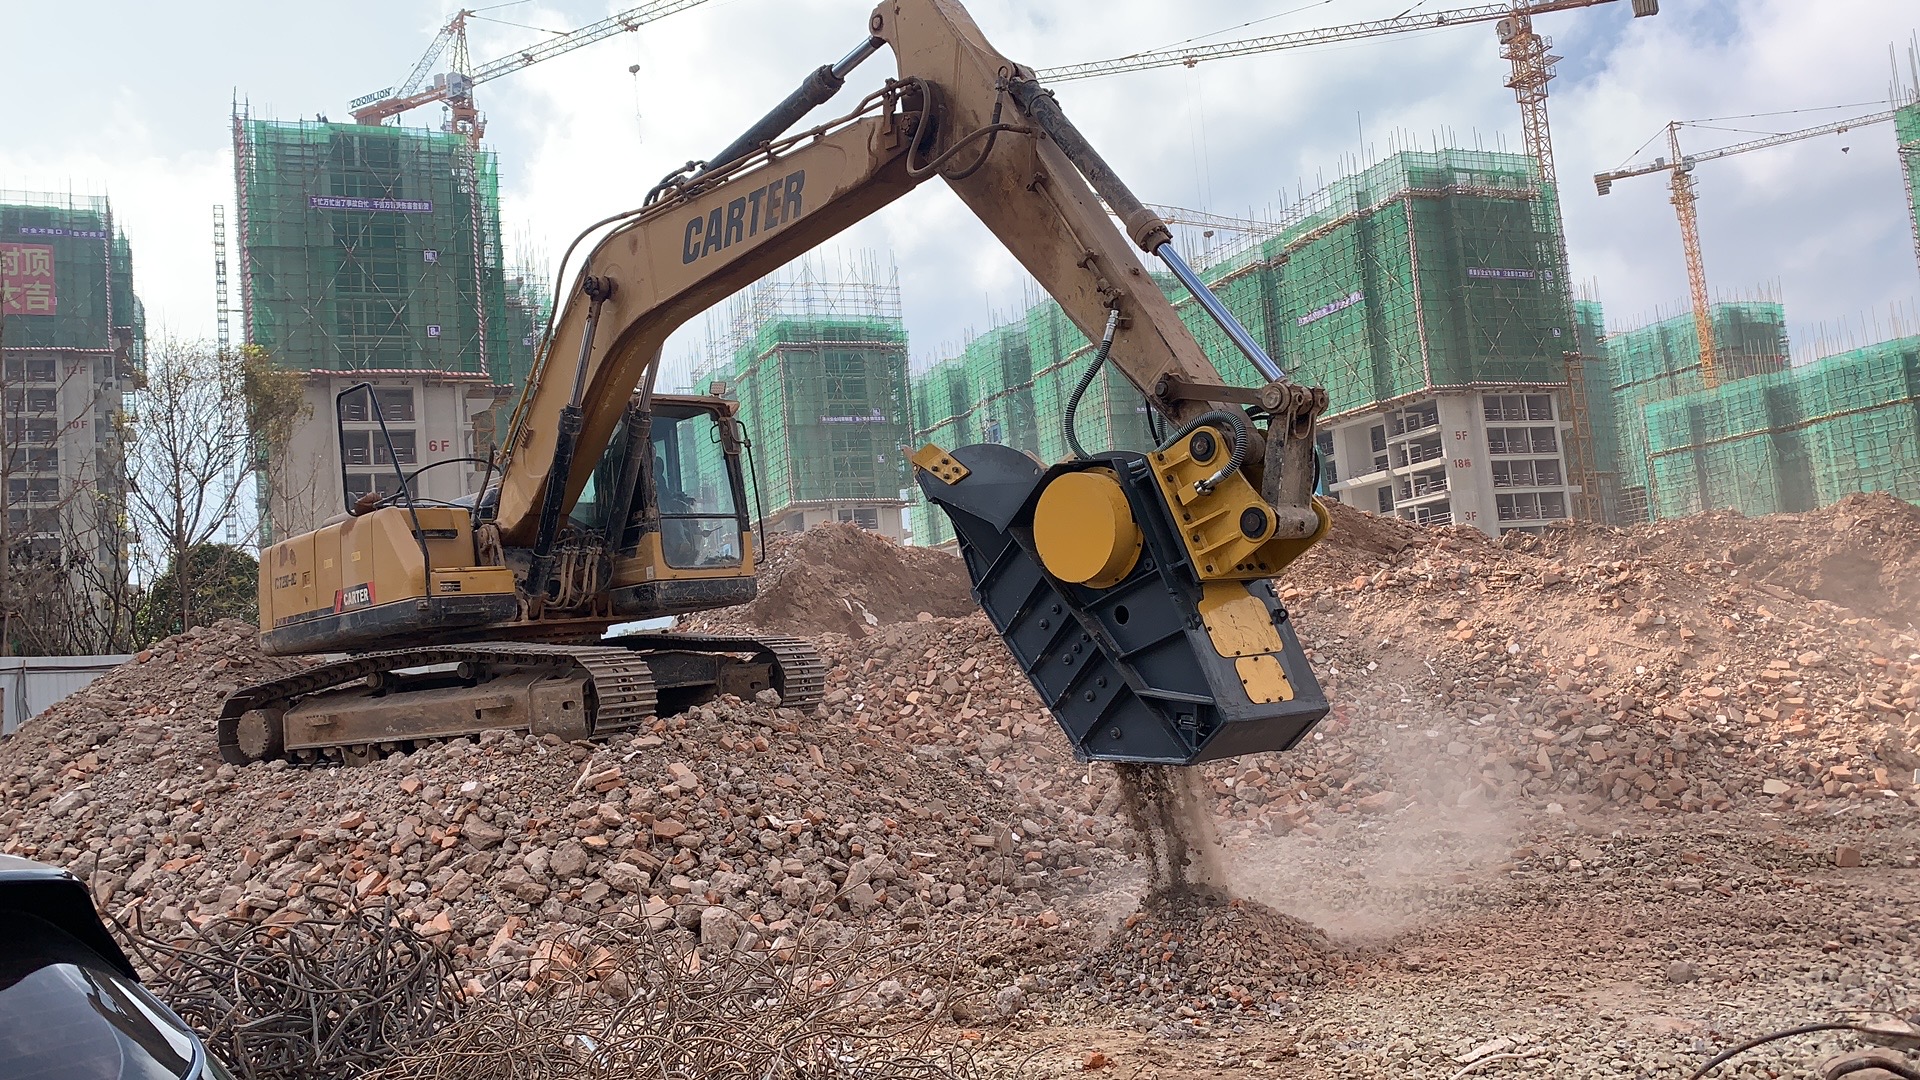 Excavator crushing bucket scene